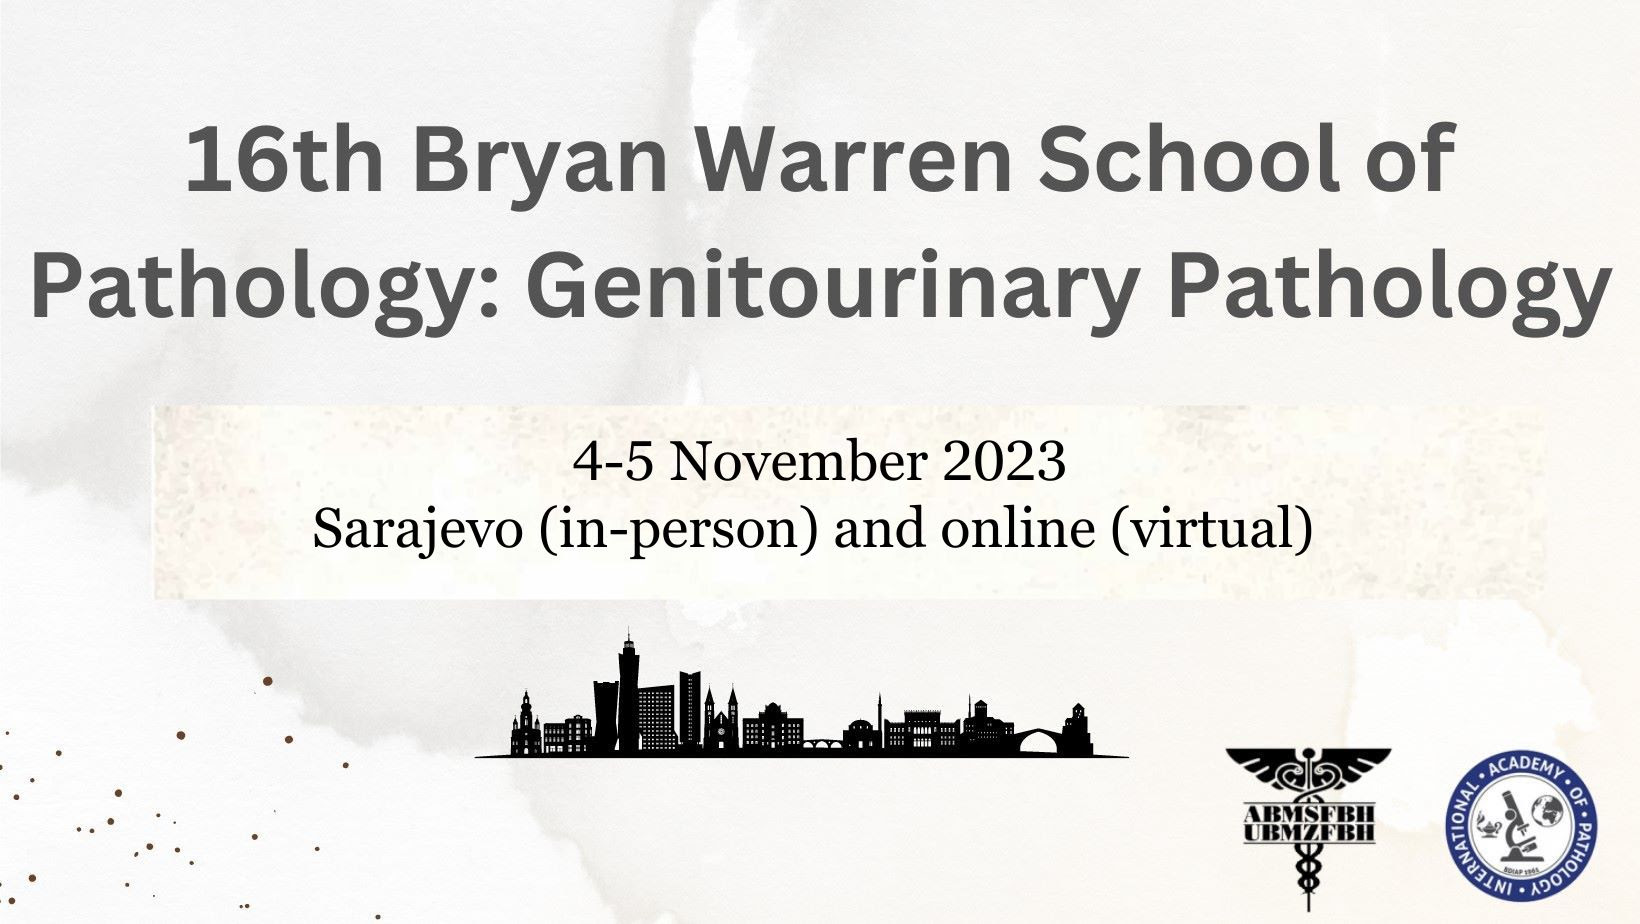 The 16th Bryan Warren School of Pathology image